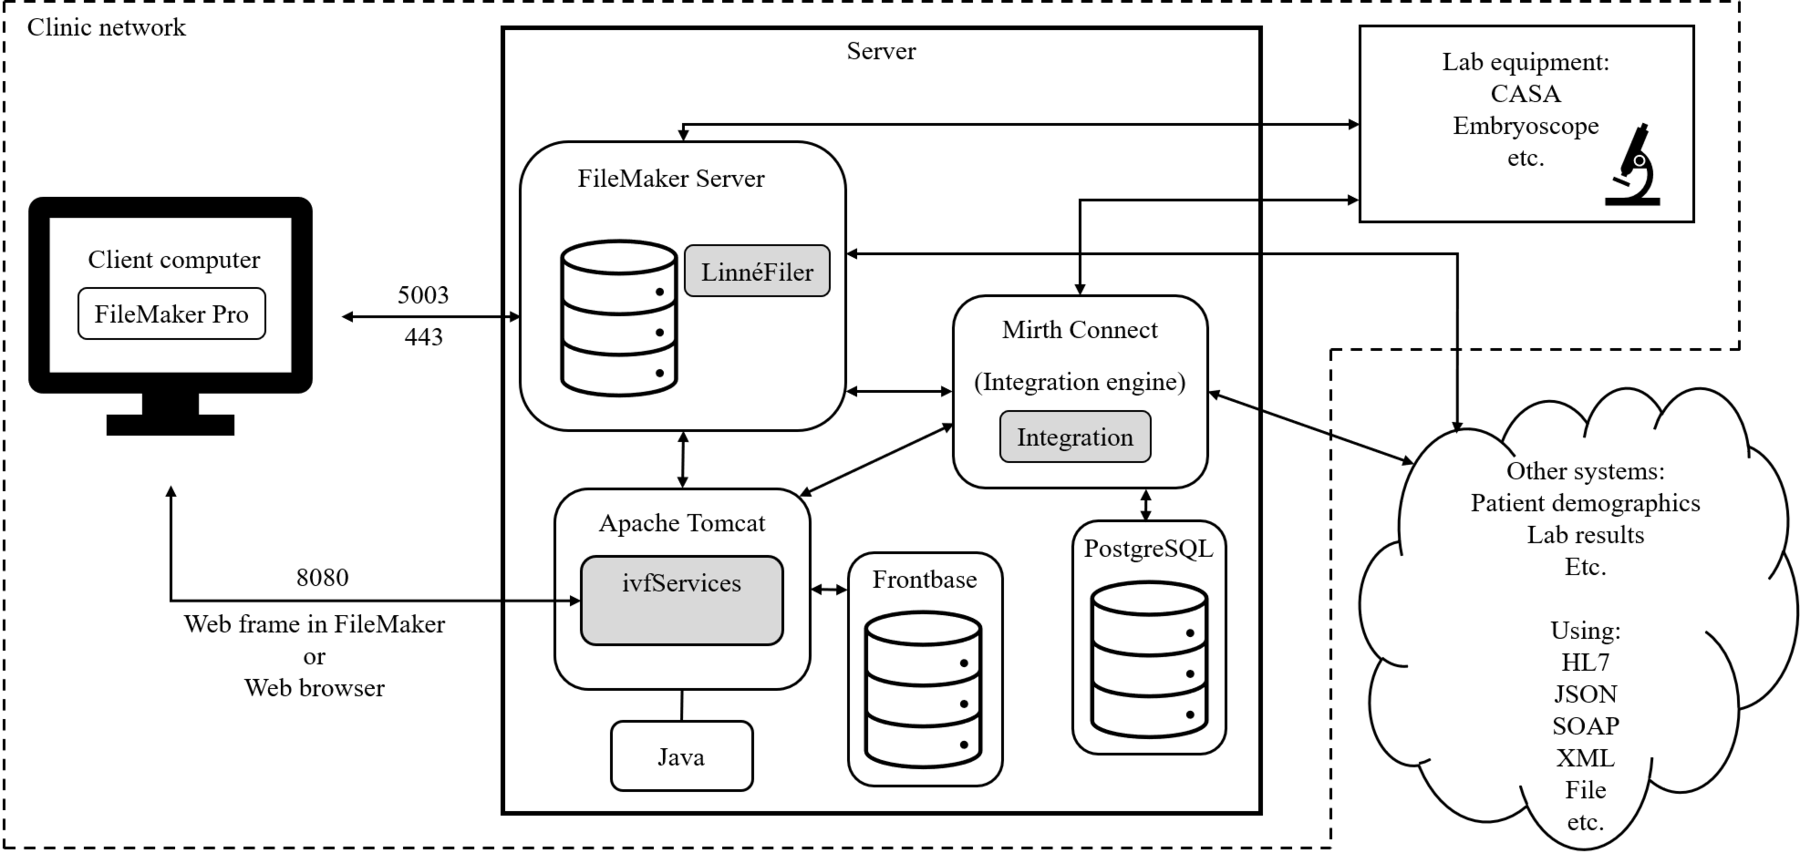 system architecture diagram